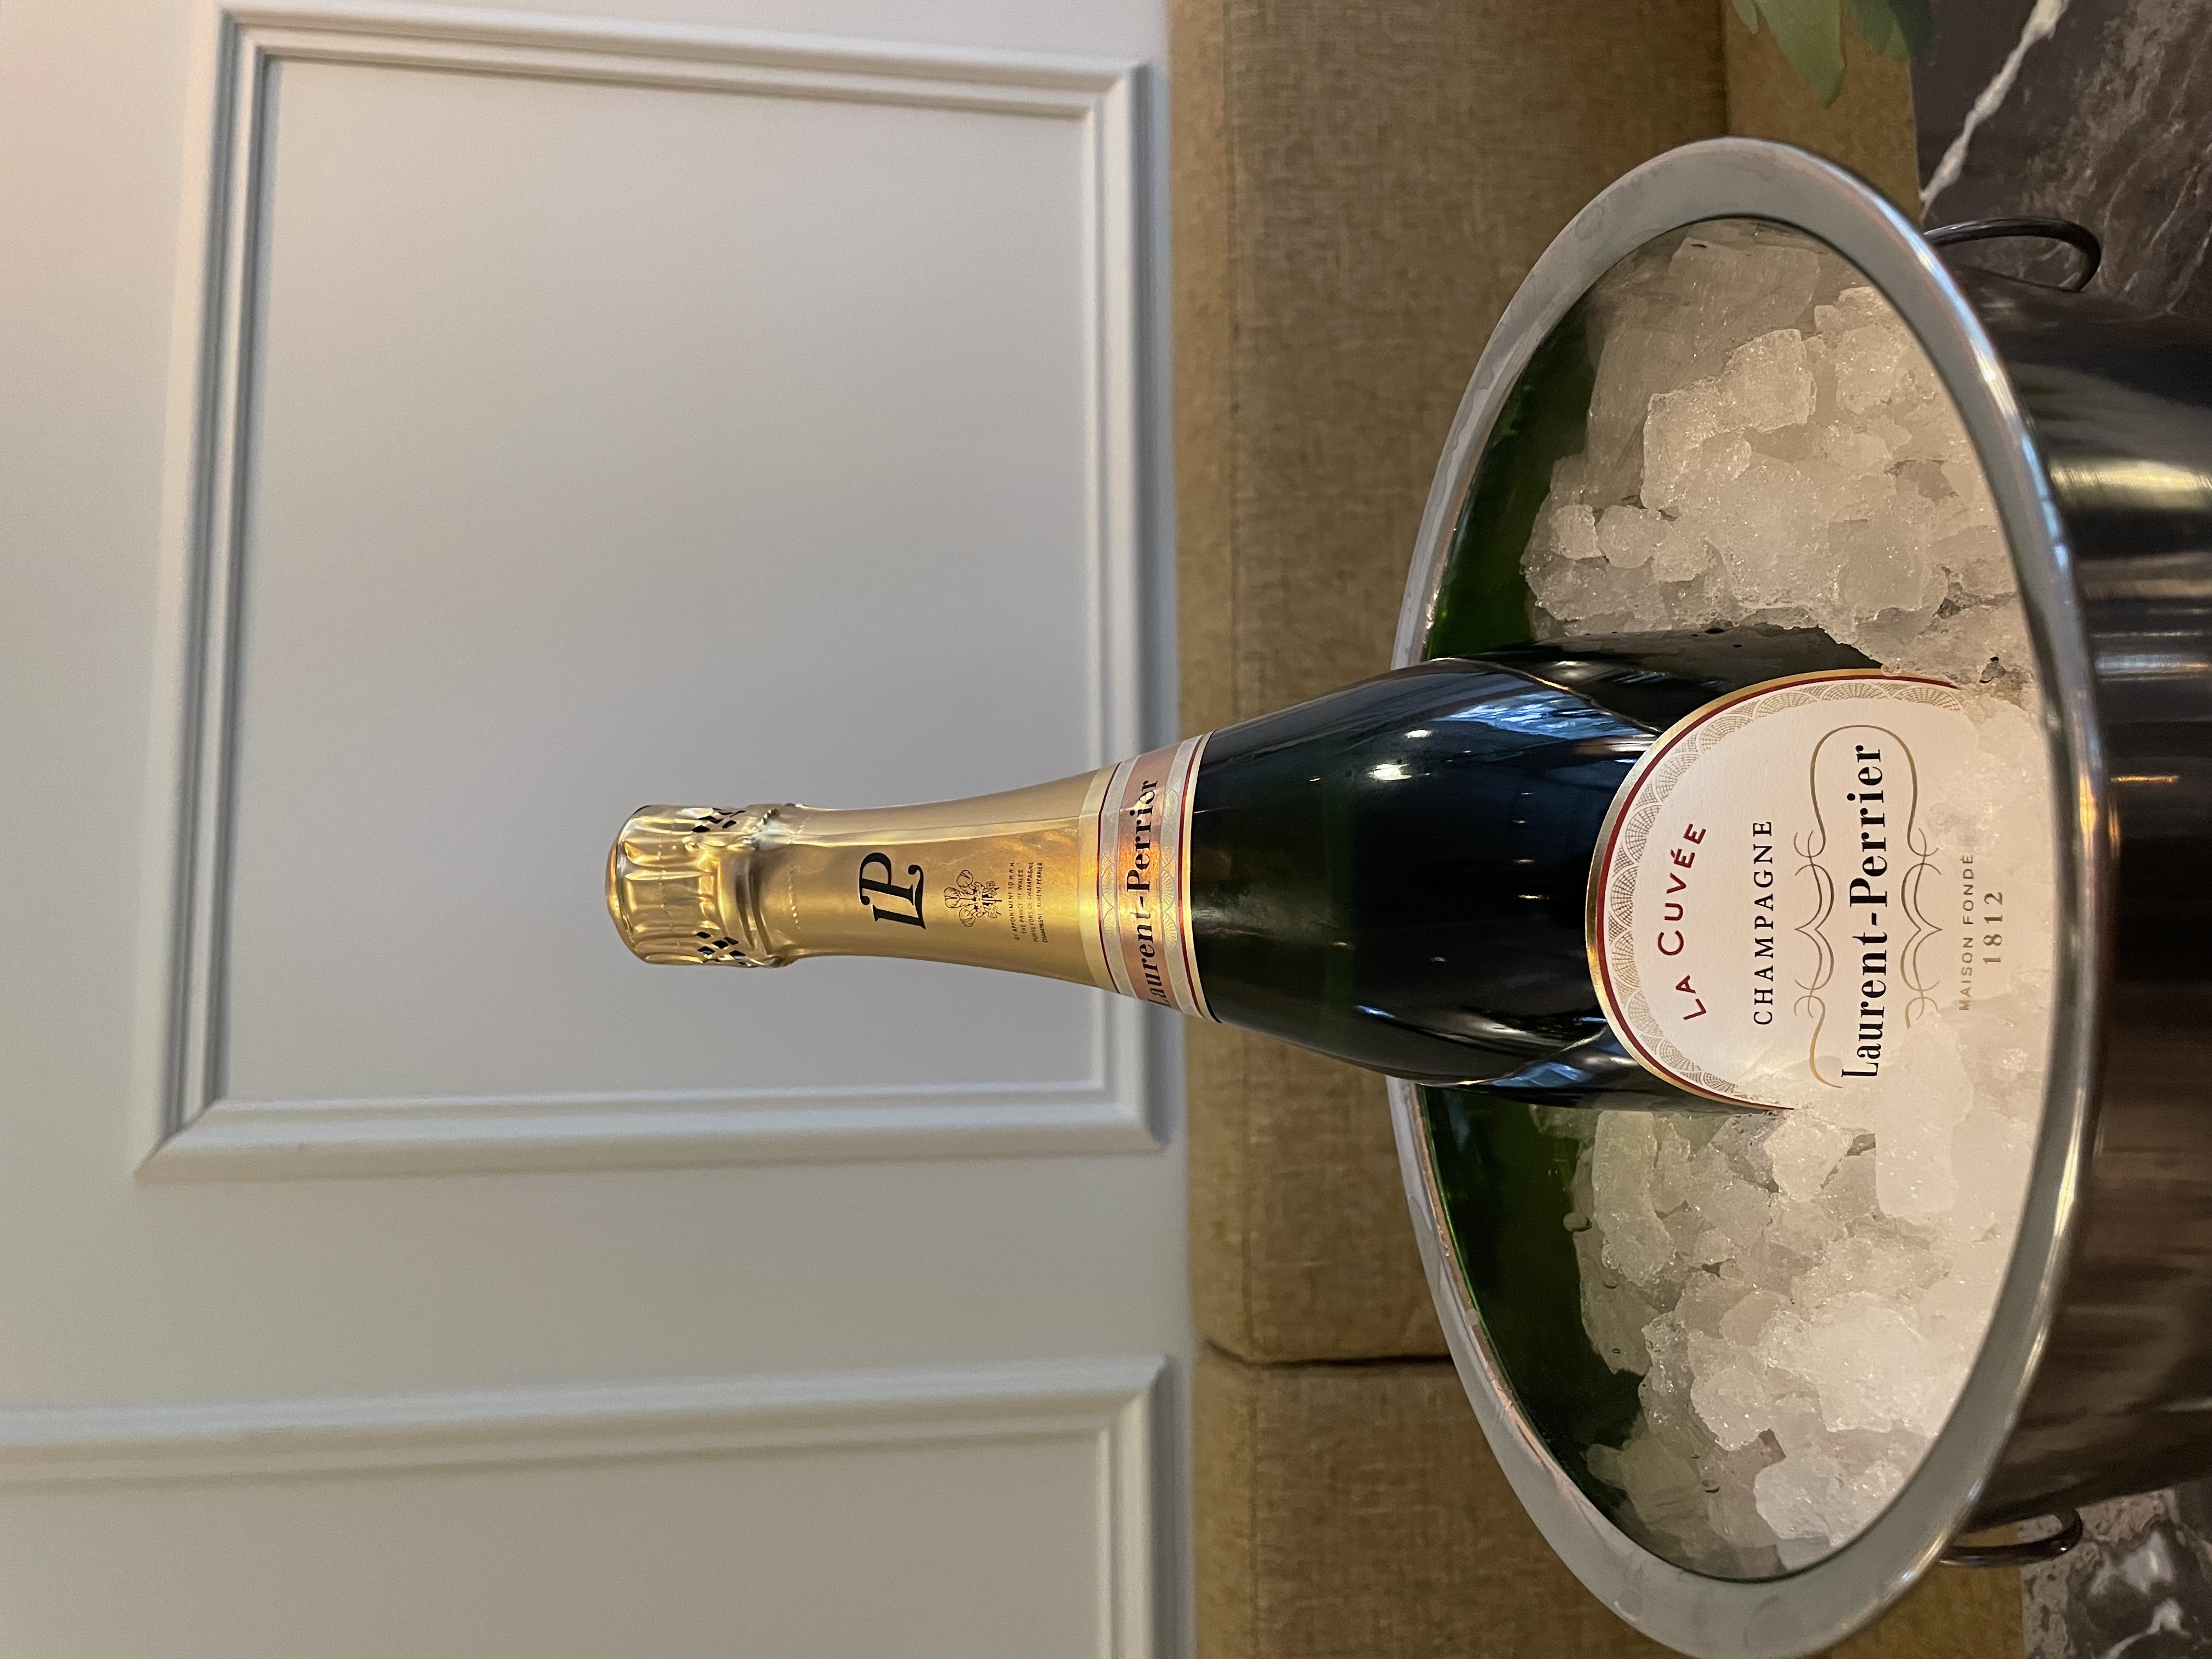 Champagne Laurent Perrier - € 108,- per bottle